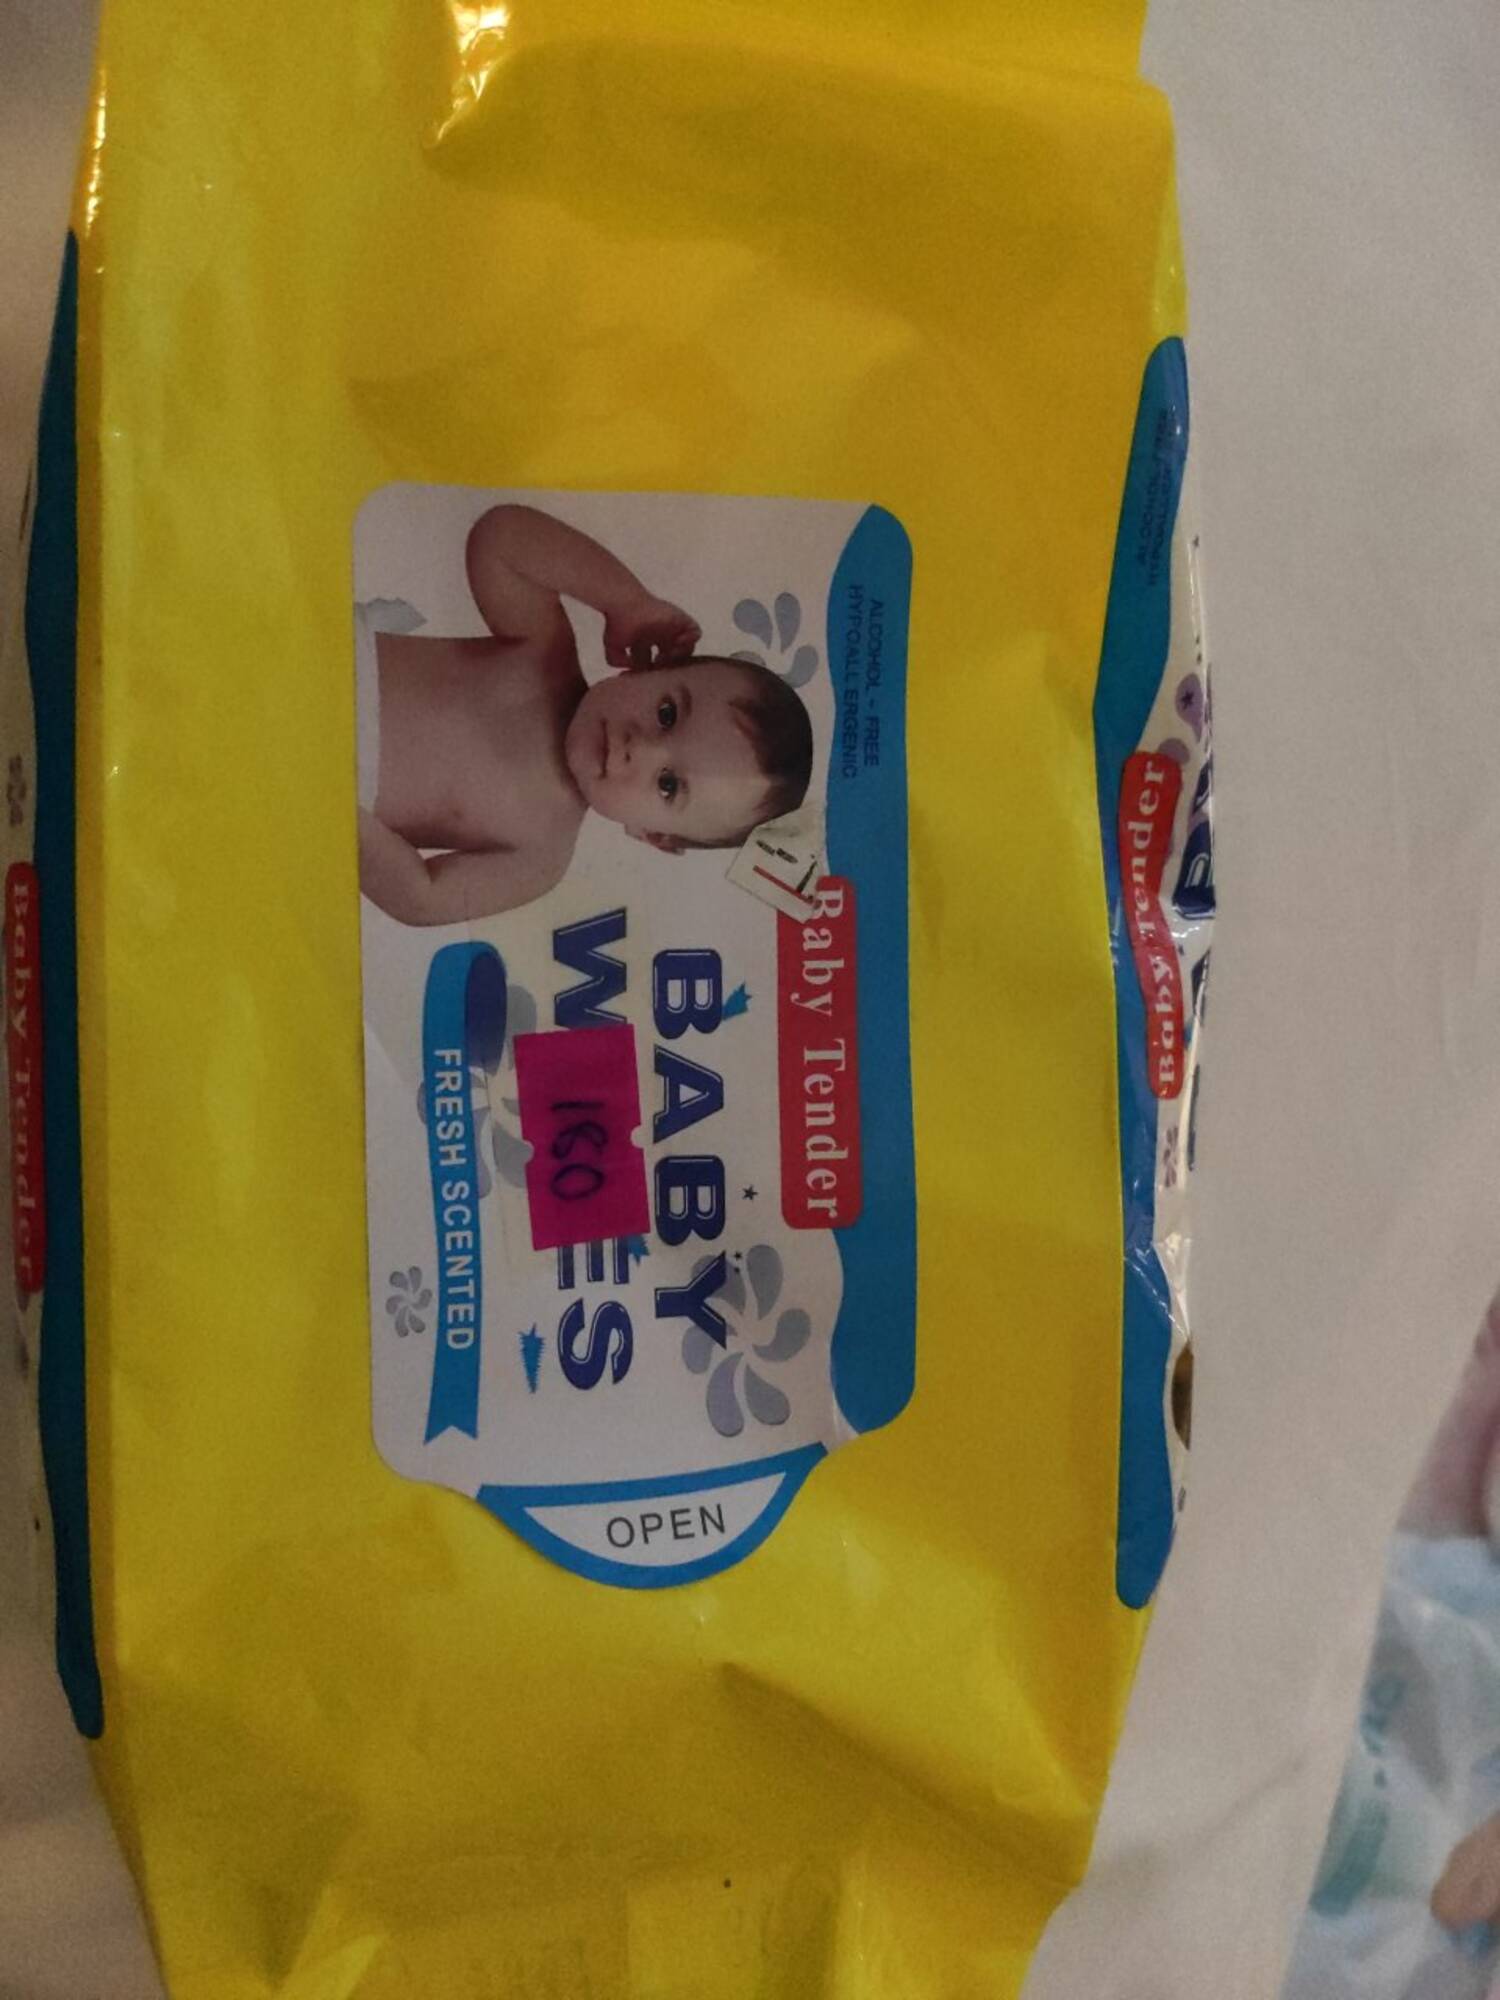 BABYTENDER - Baby wipes fresh scented